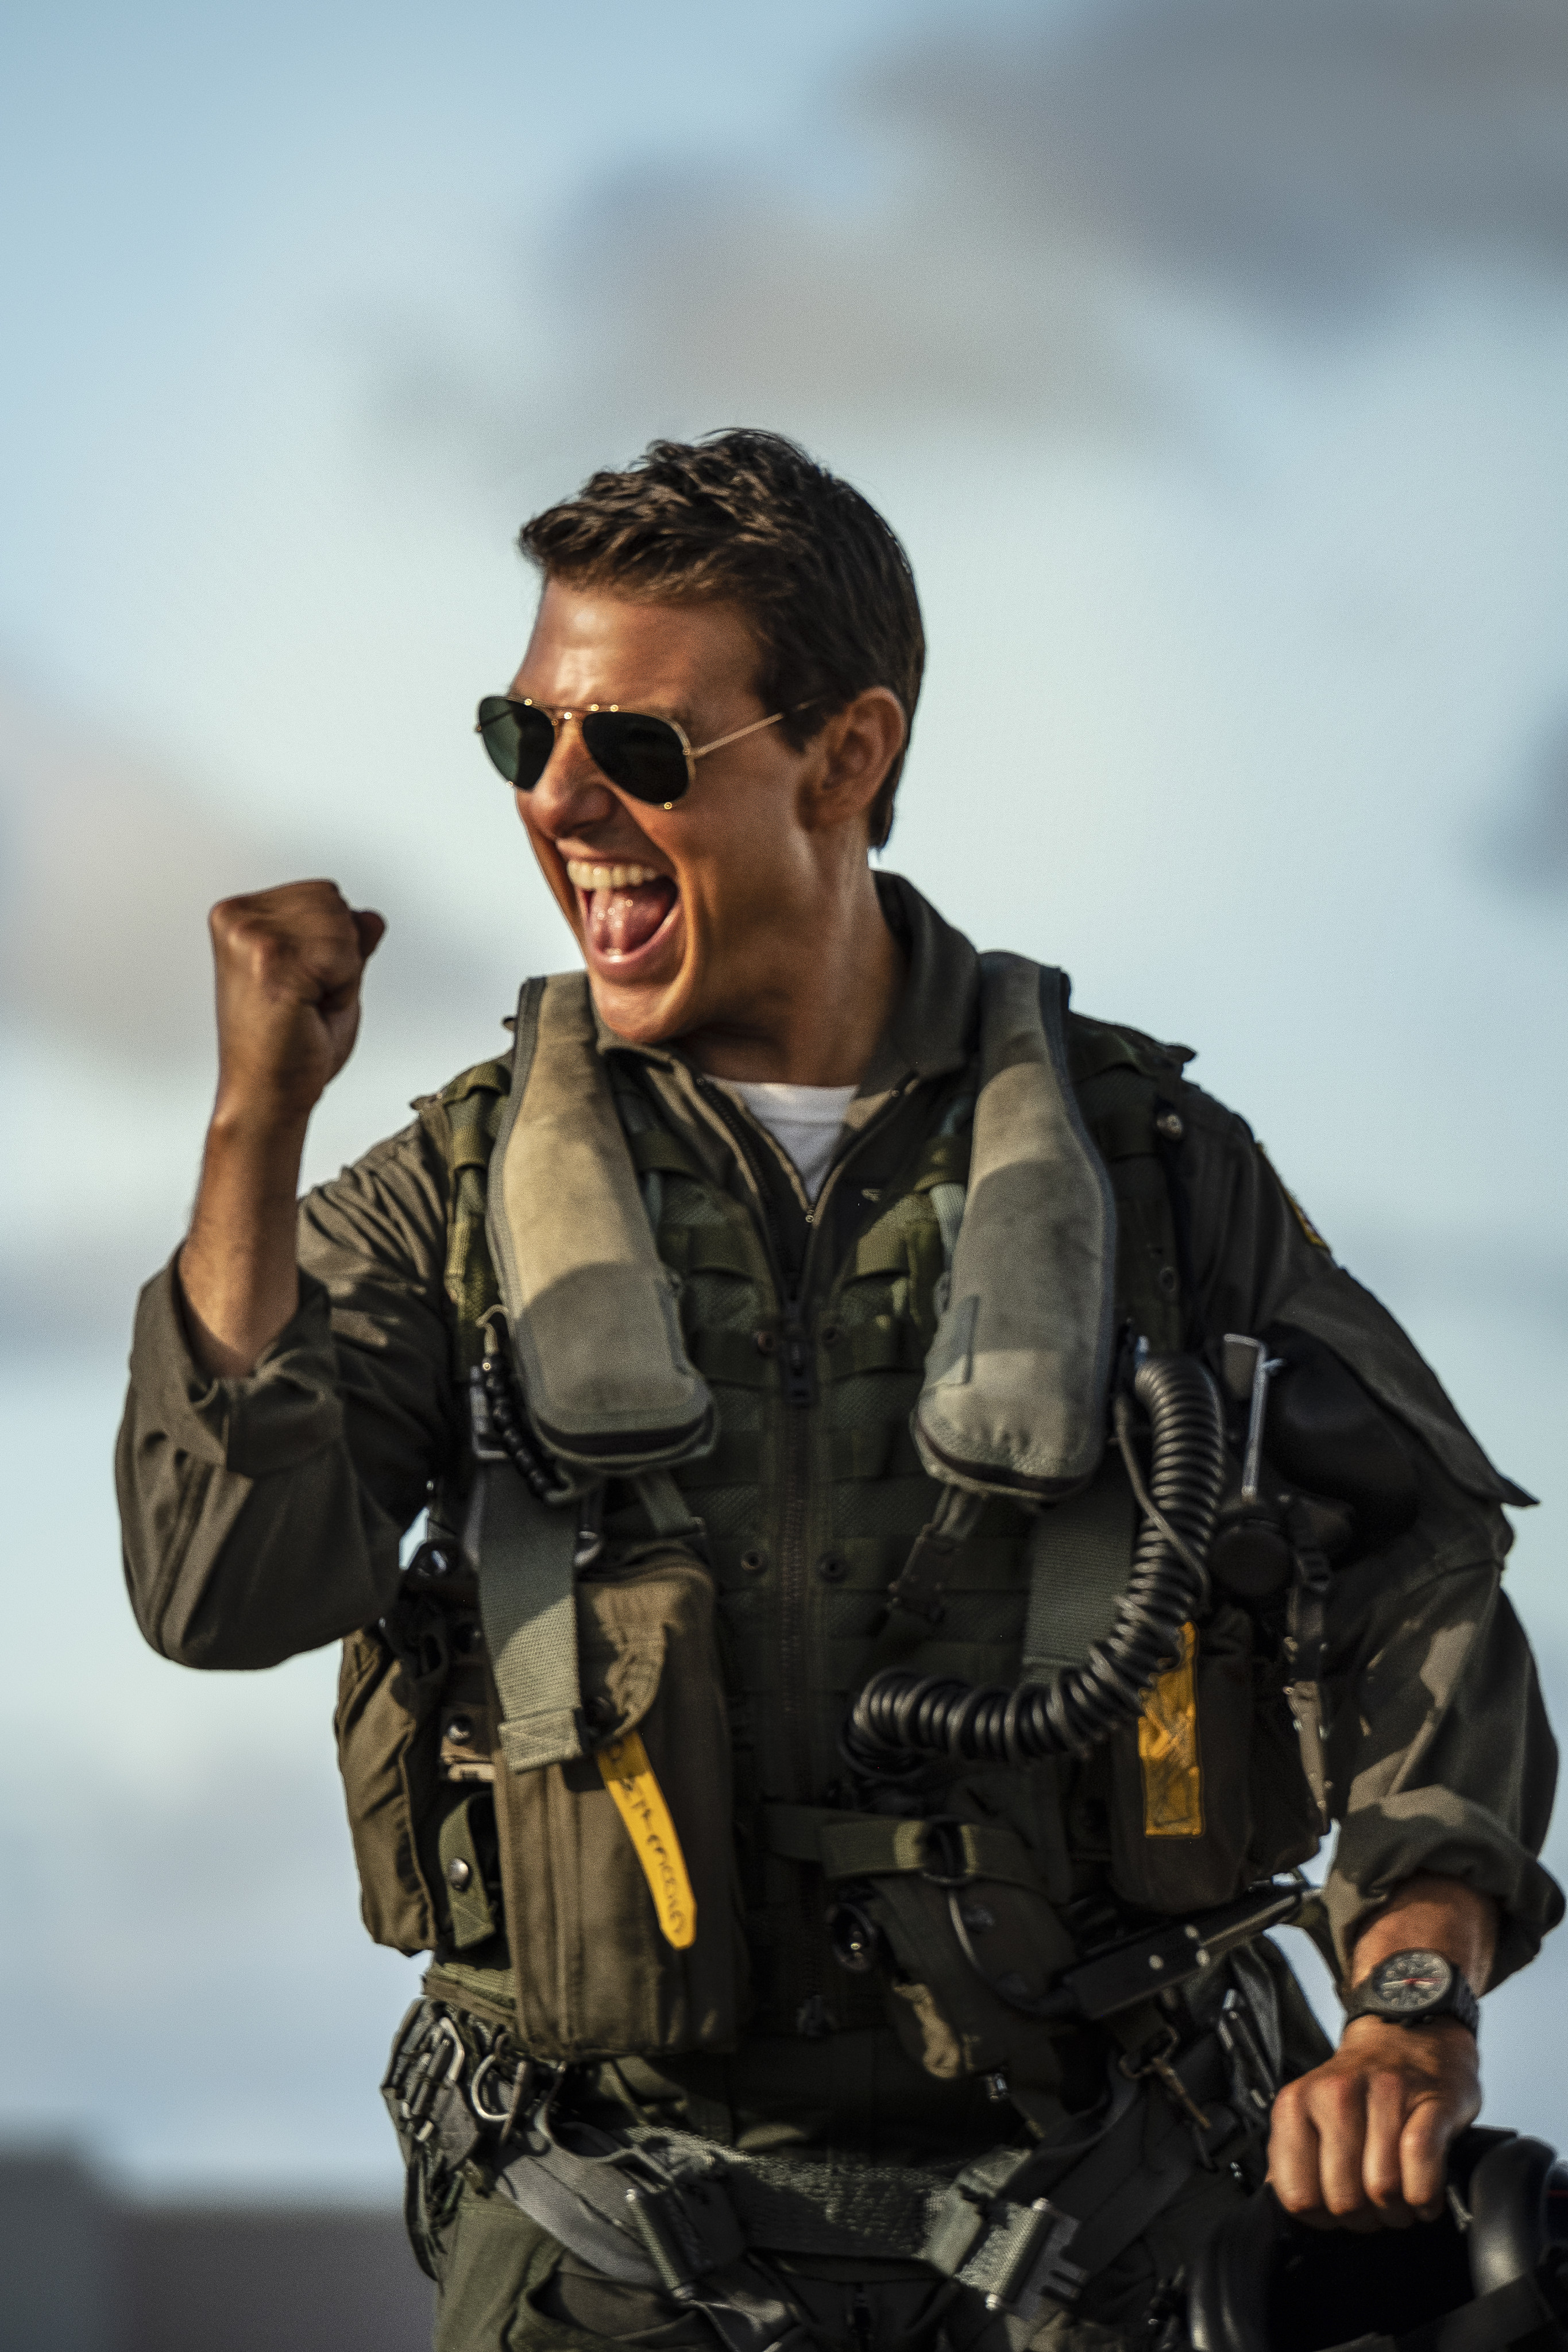 Tom Cruise as Capt. Pete “Maverick” Mitchell in a still from Top Gun: Maverick